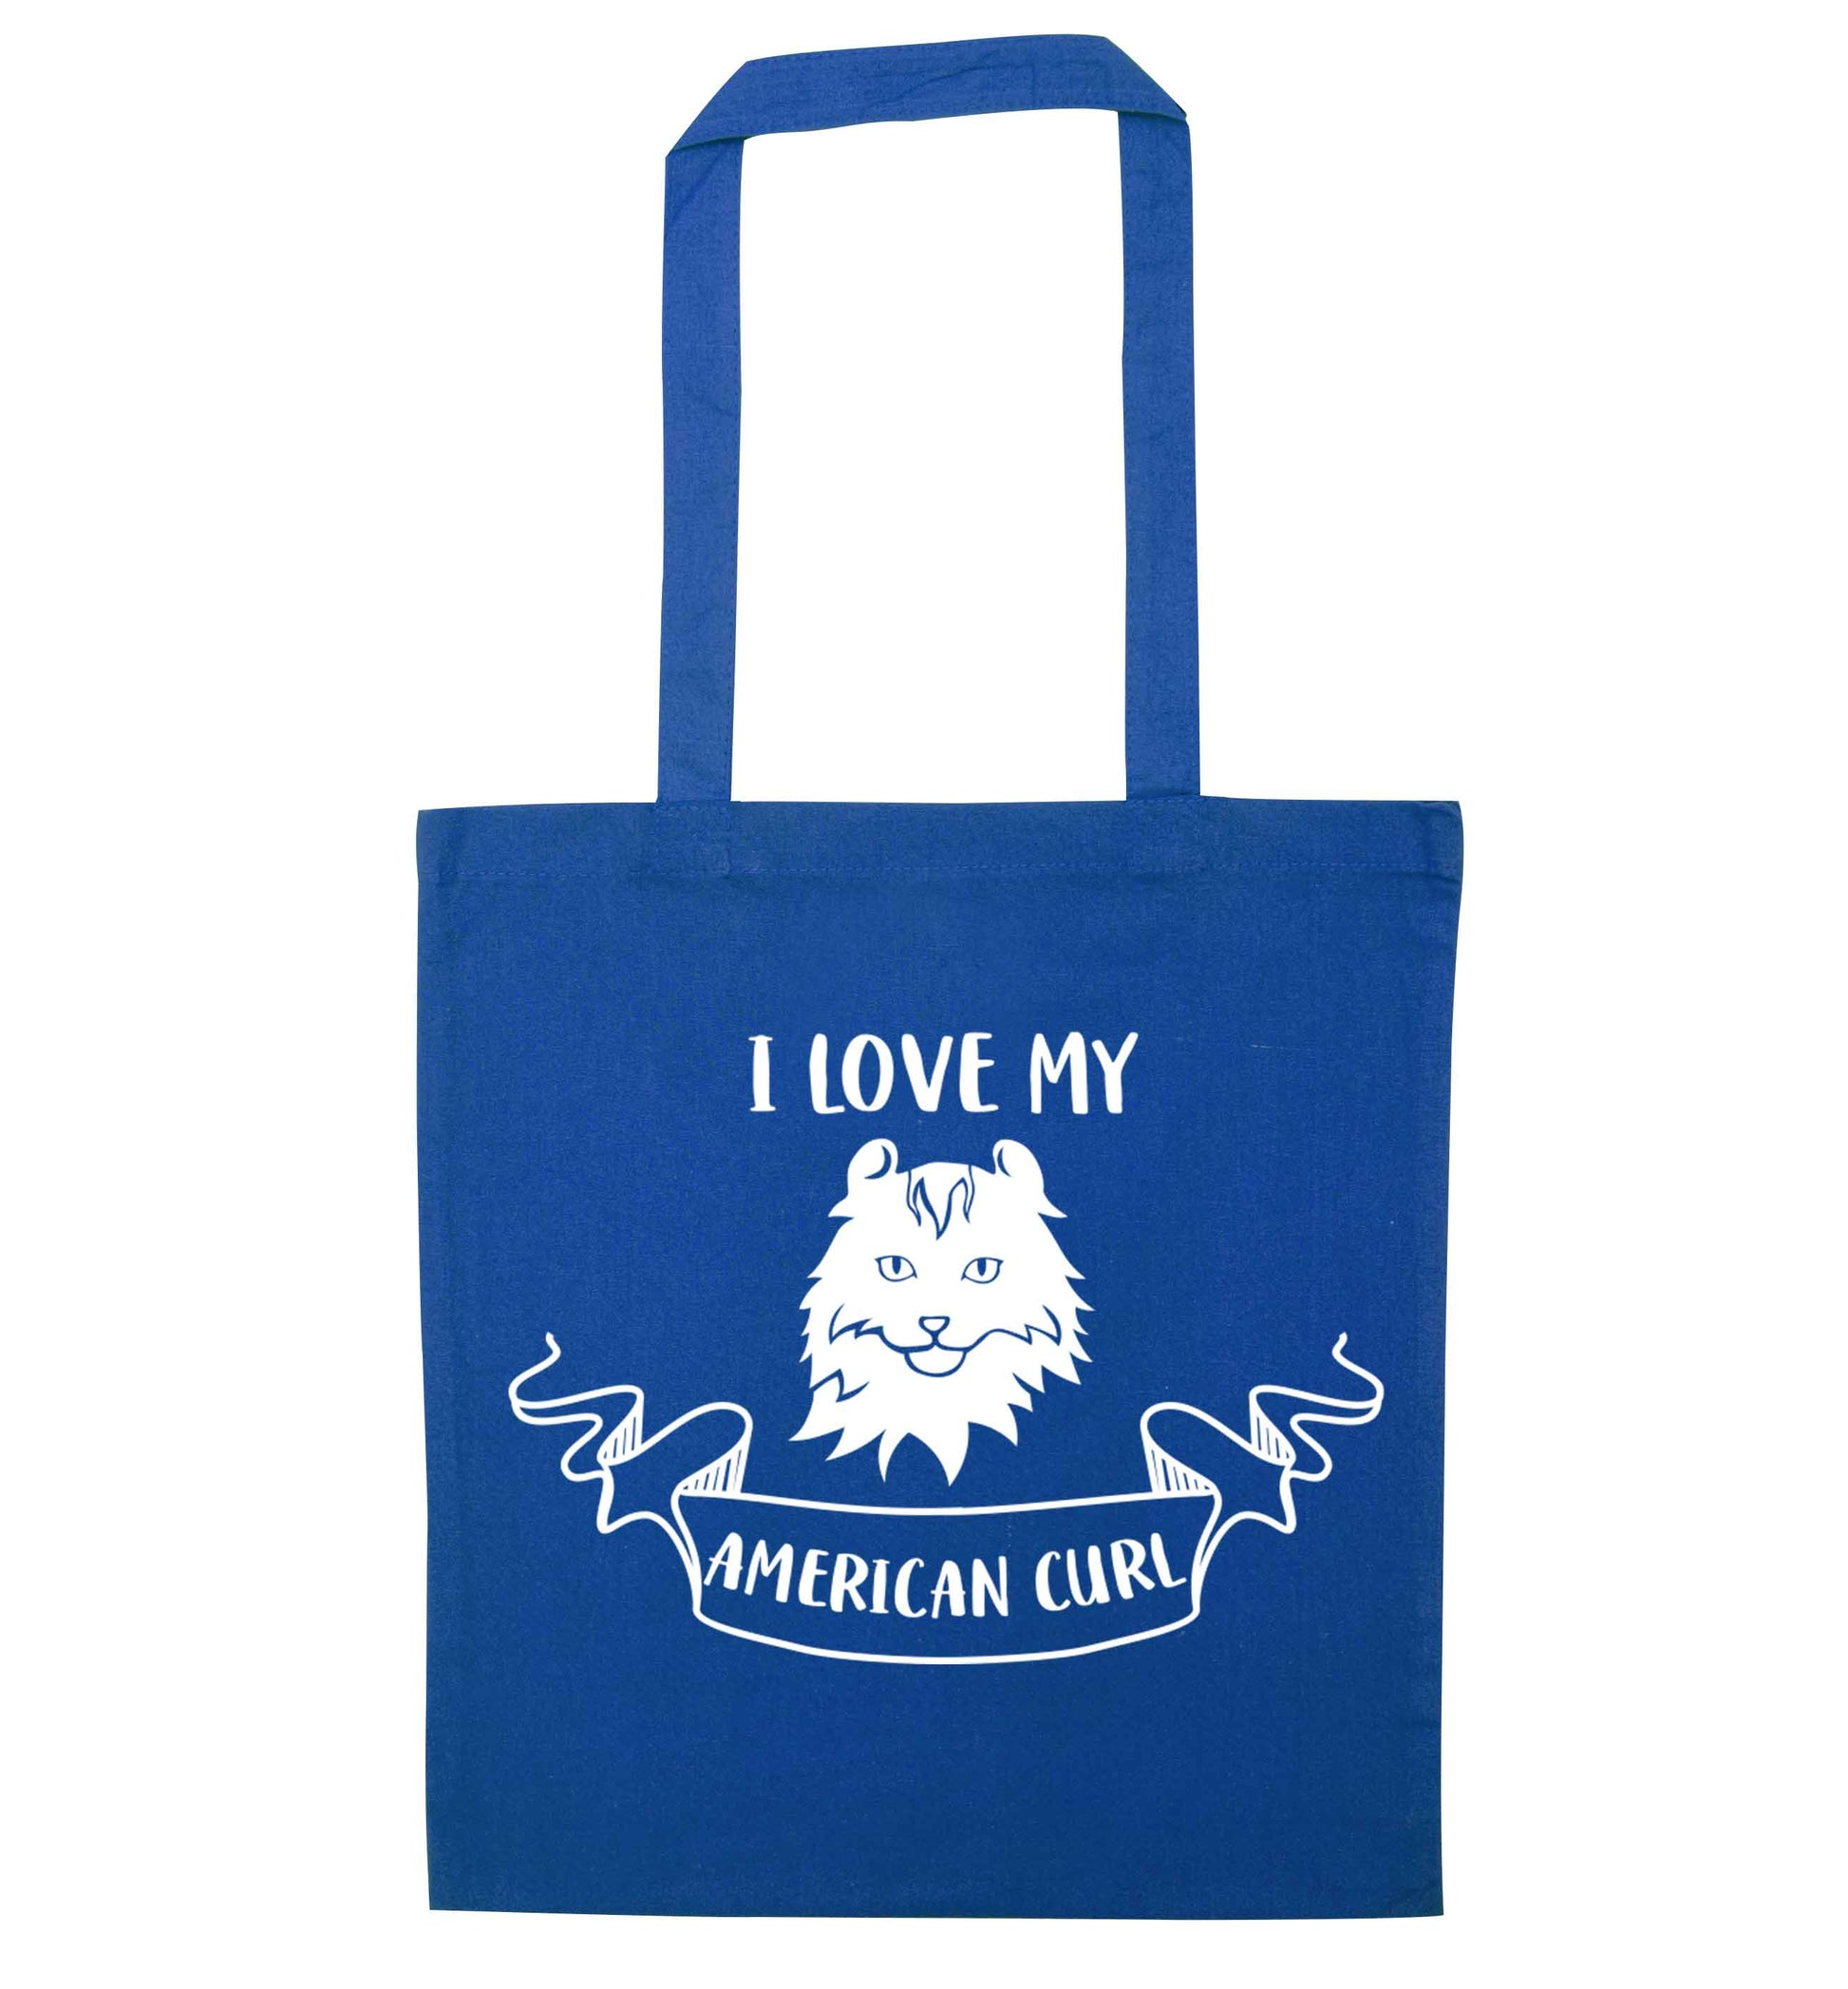 I love my American curl blue tote bag